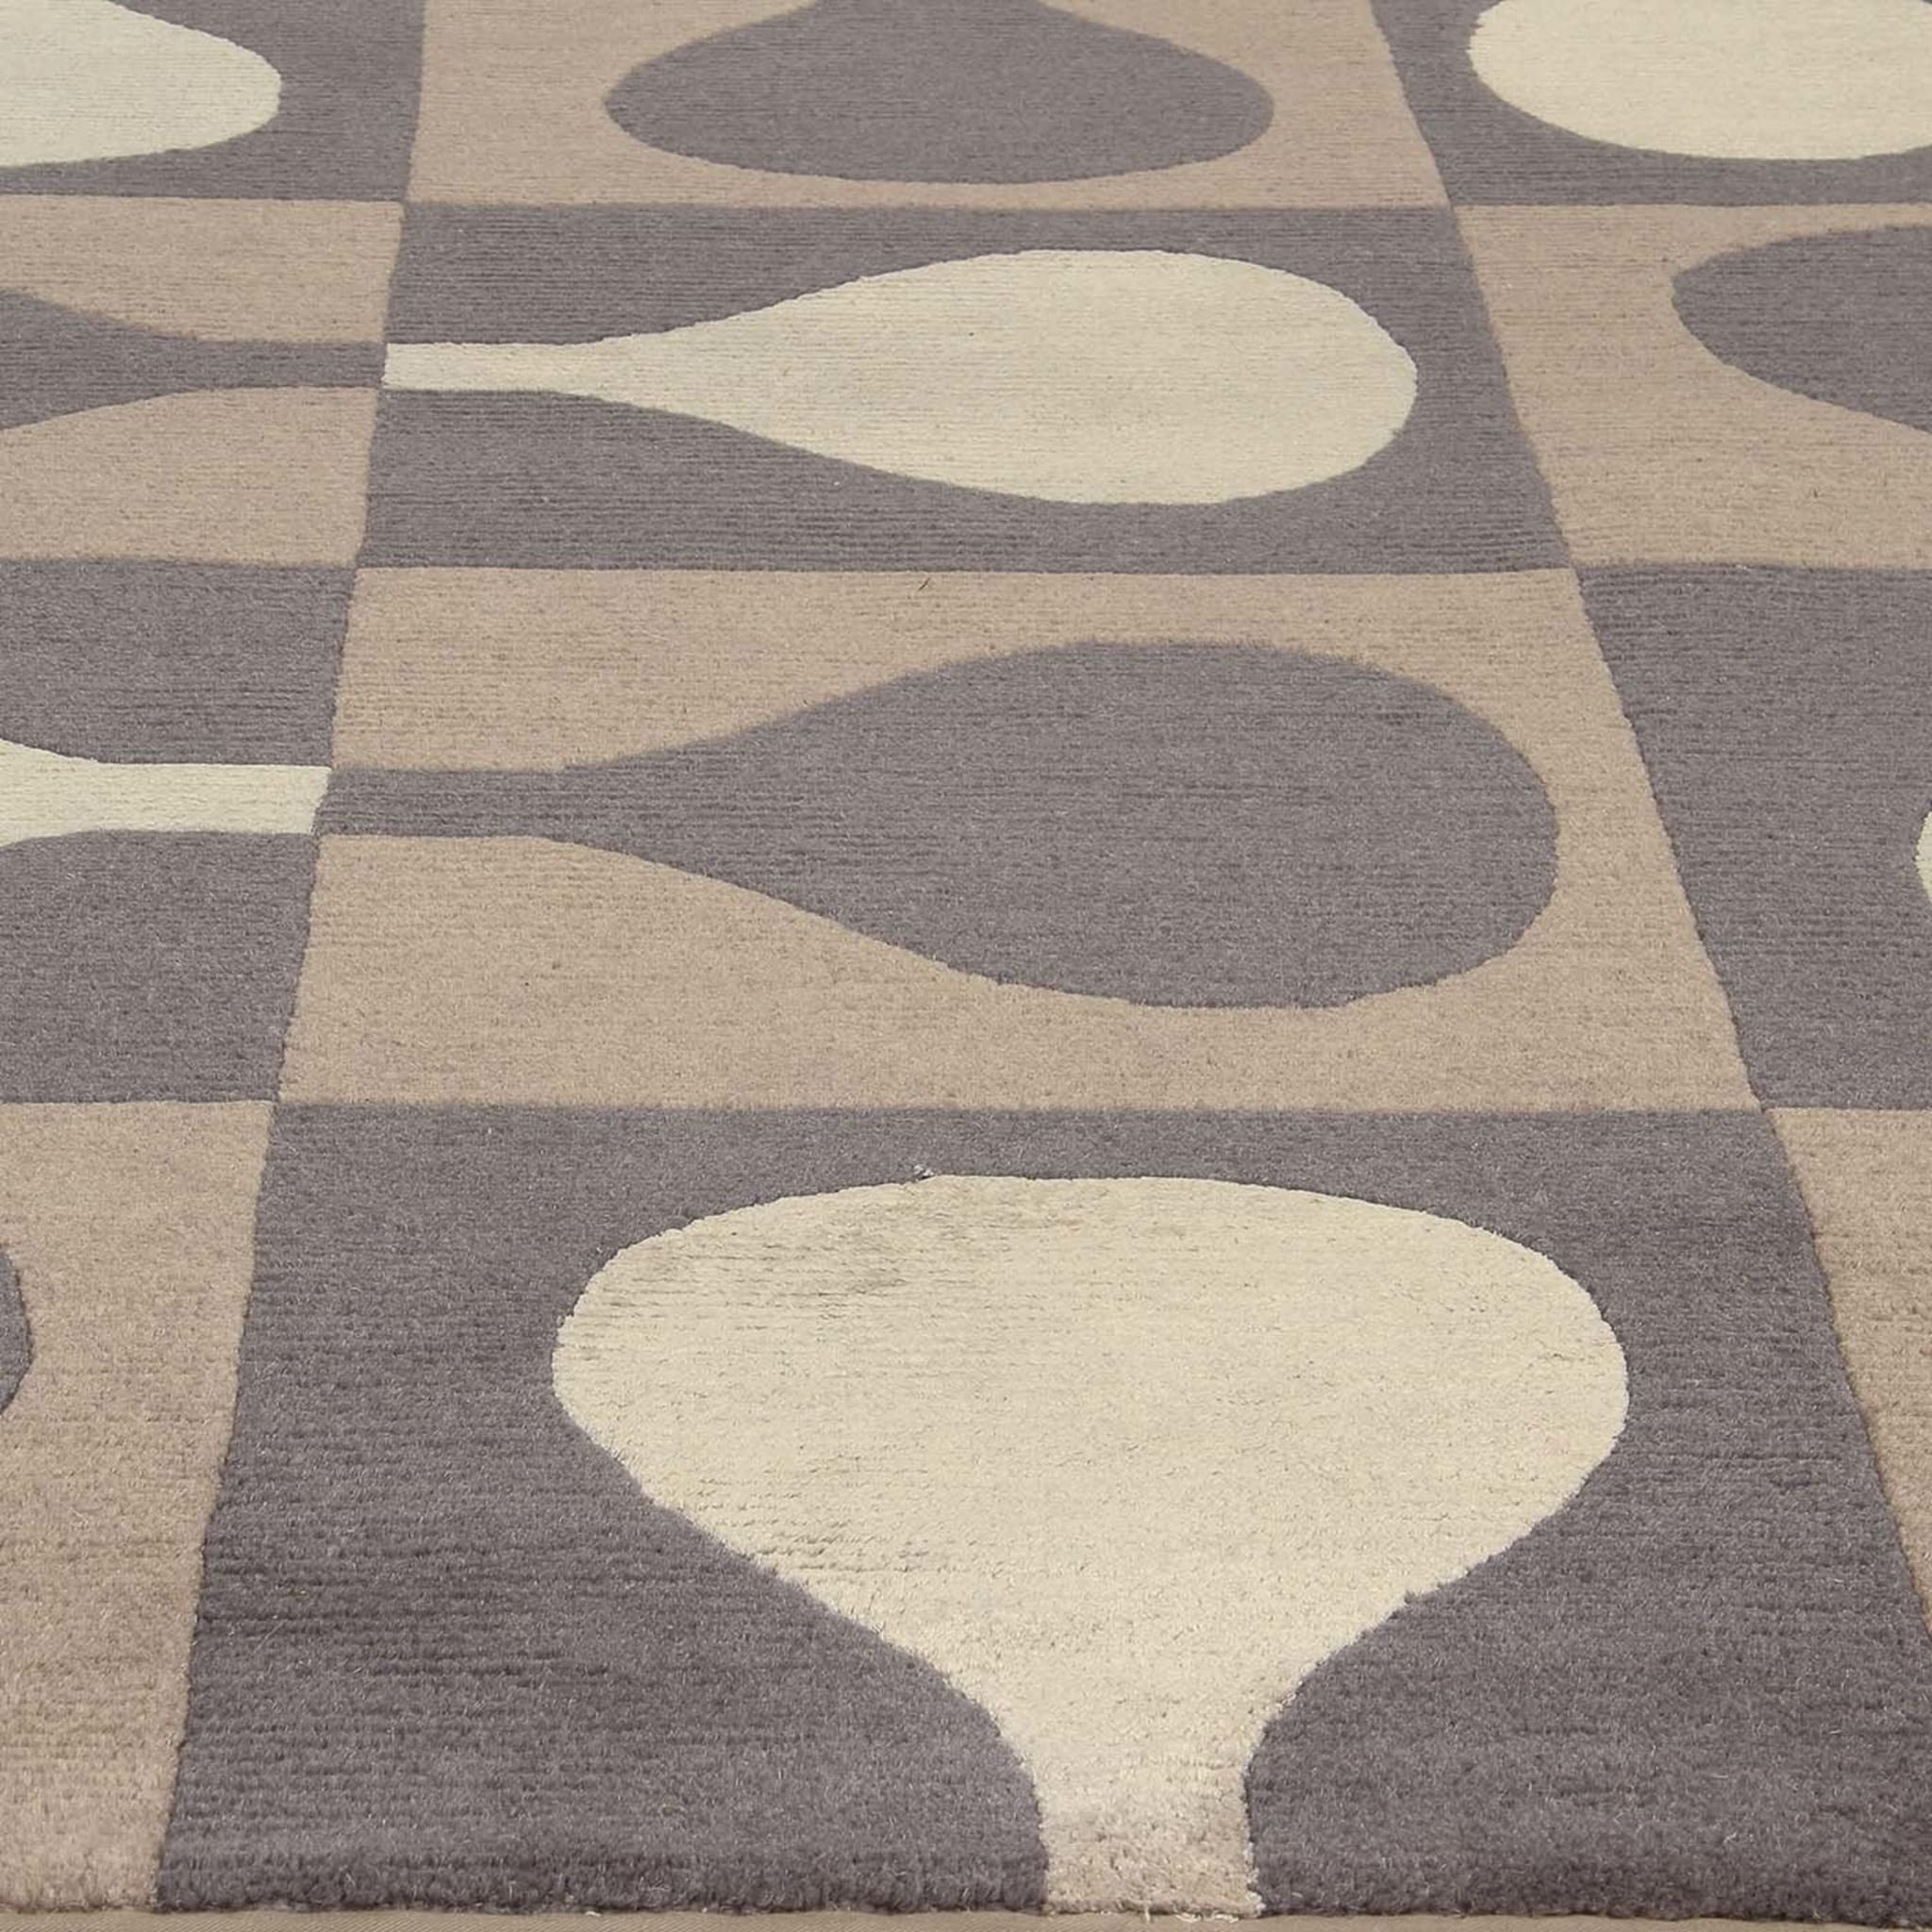 Sorrento Brown Carpet by Gio Ponti - Alternative view 1